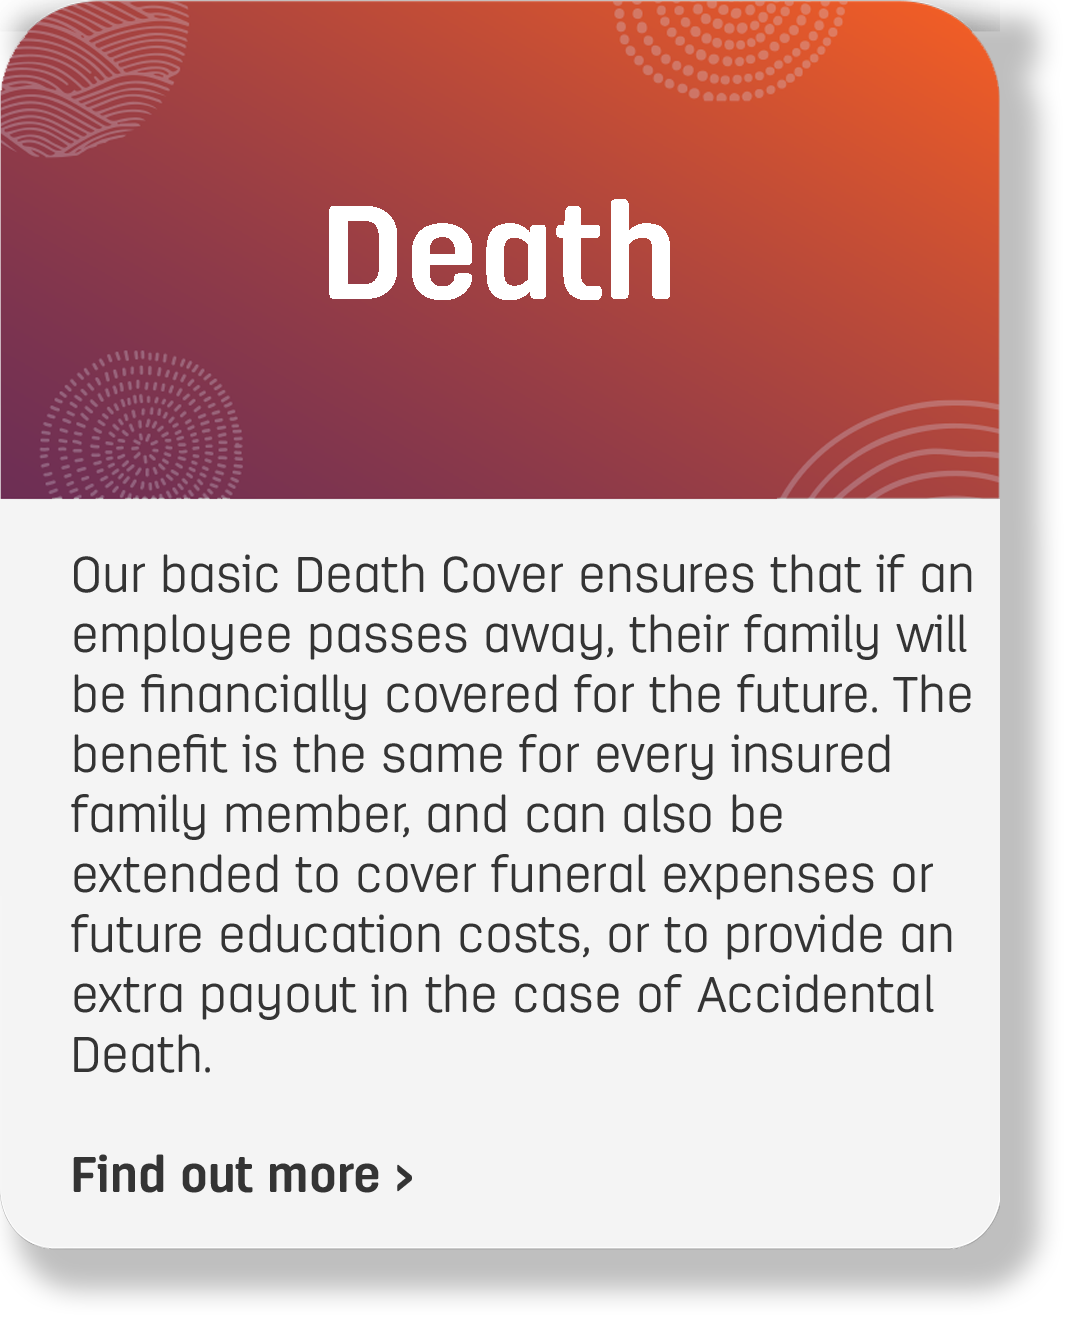 Death benefits image